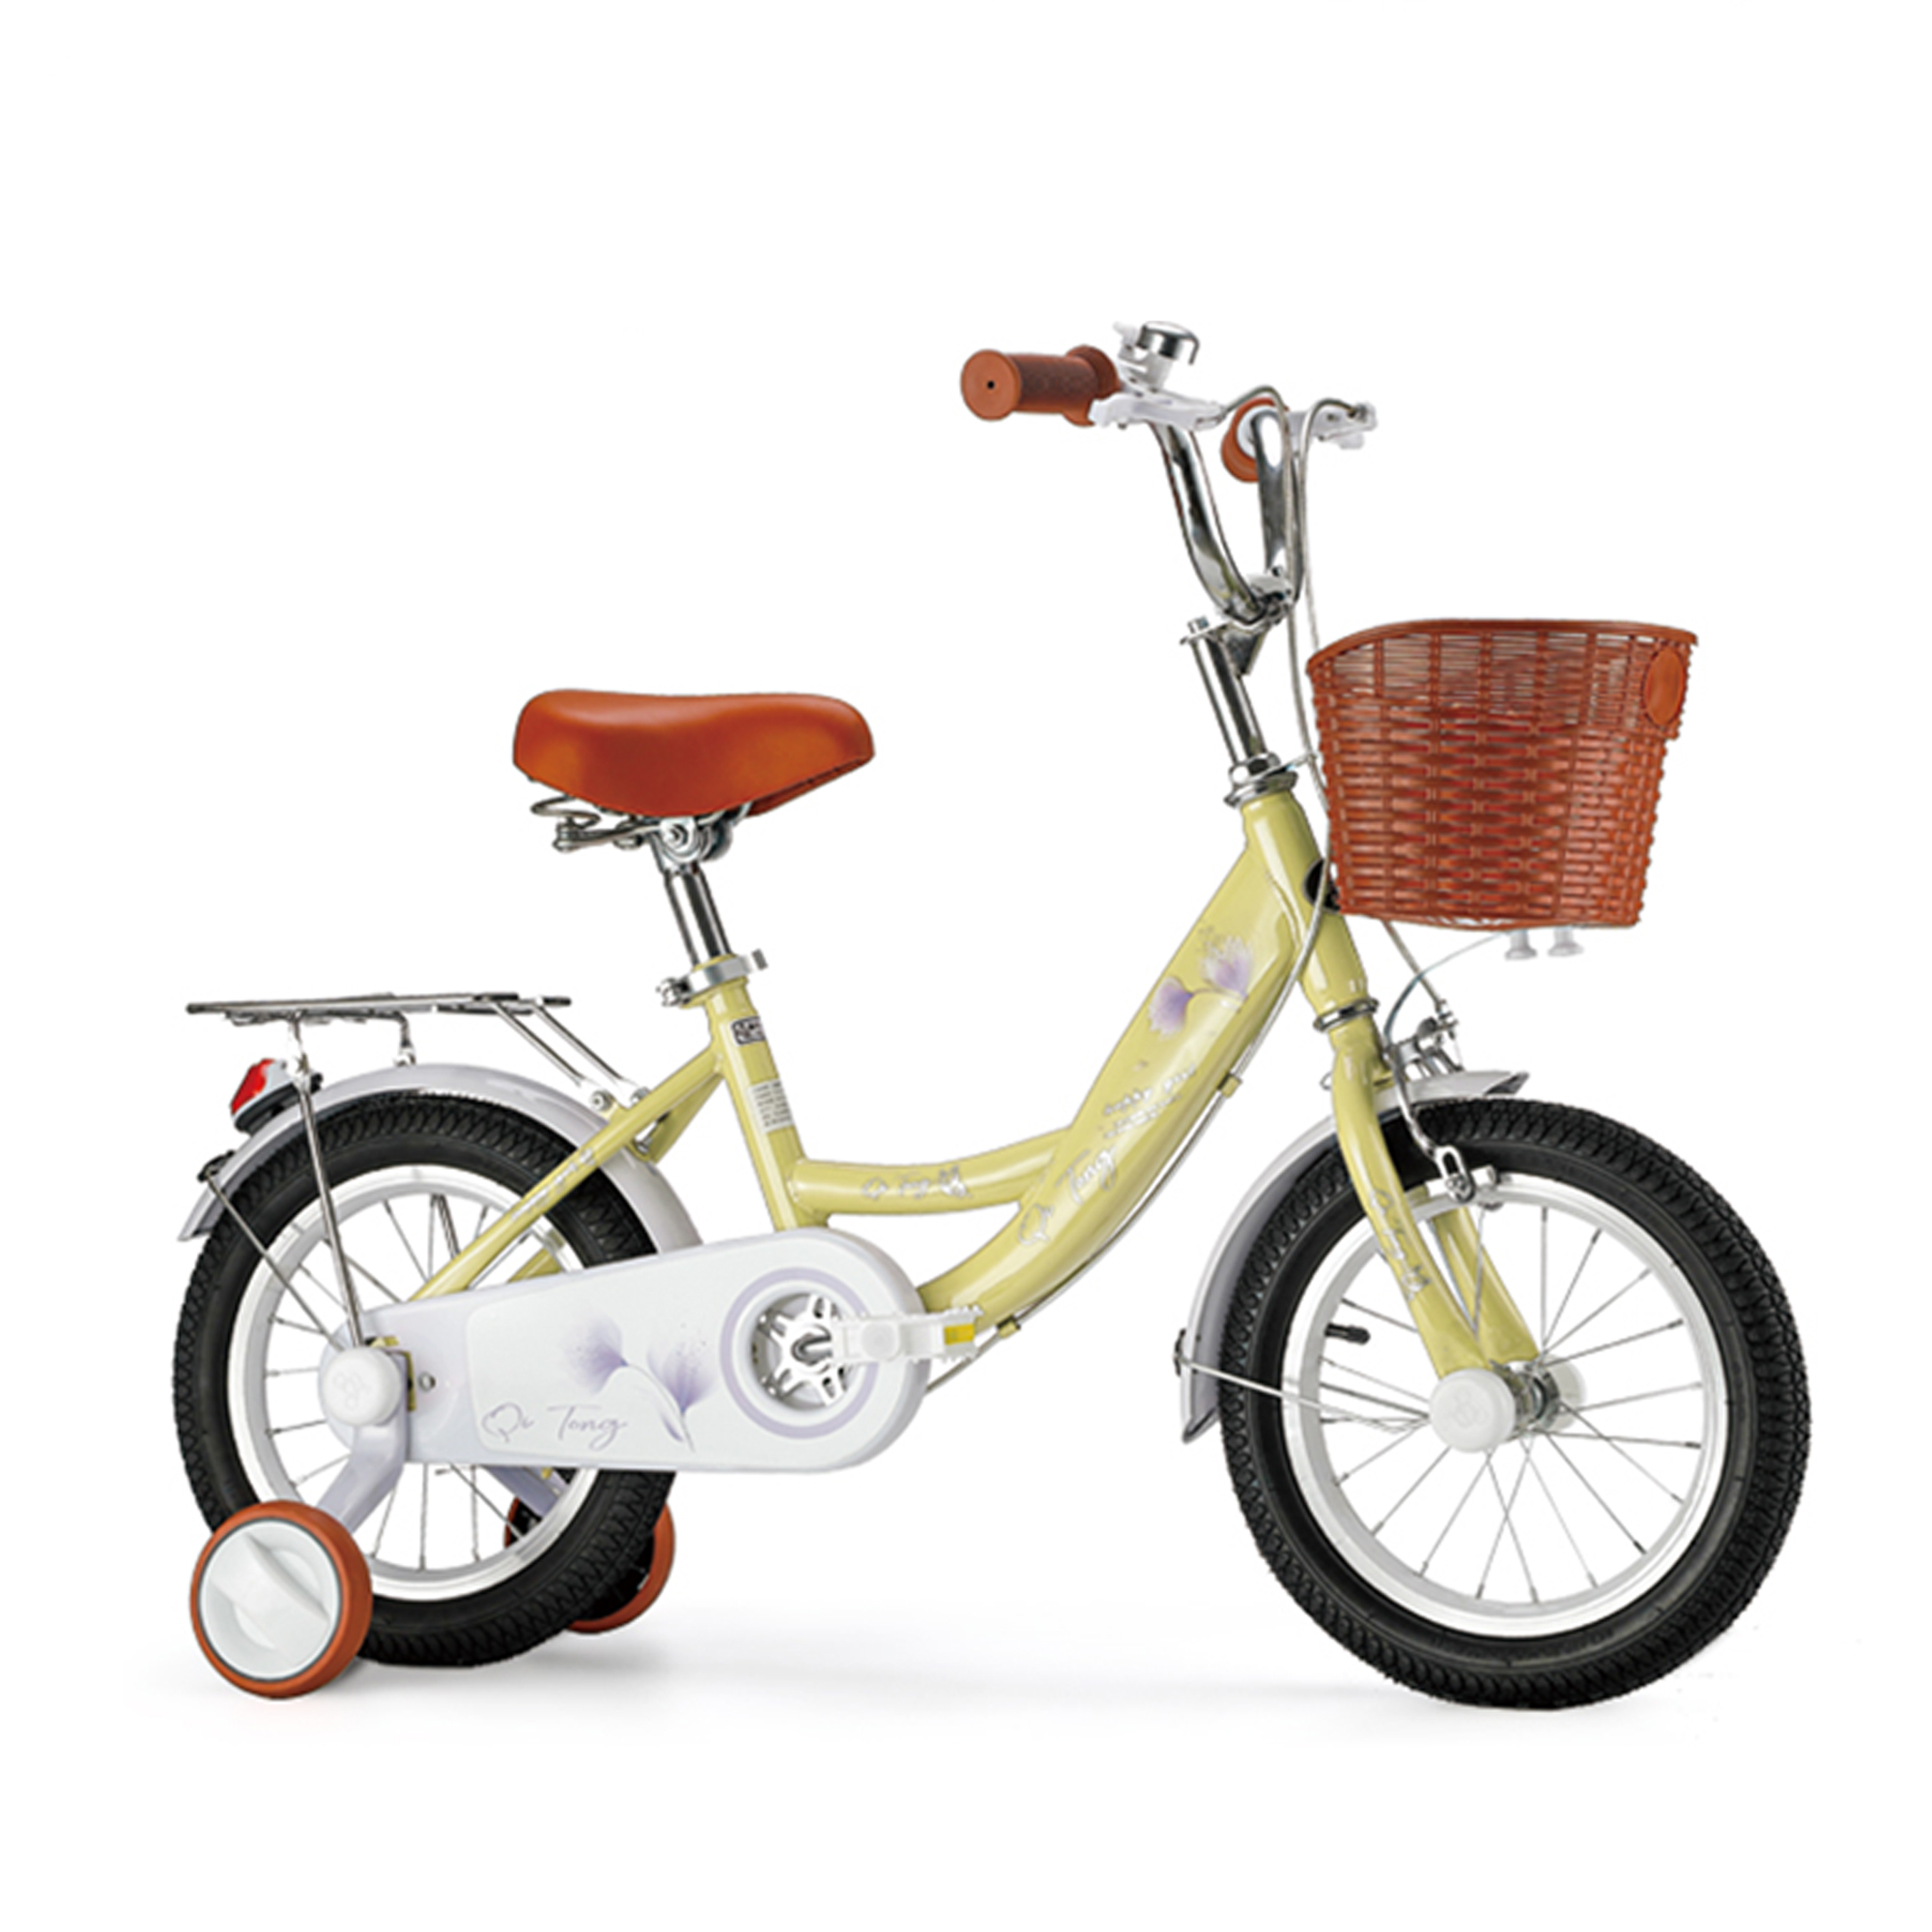 Fabricación directa de fábrica de bicicletas para niños con marco de acero de buena calidad para niña Imagen destacada